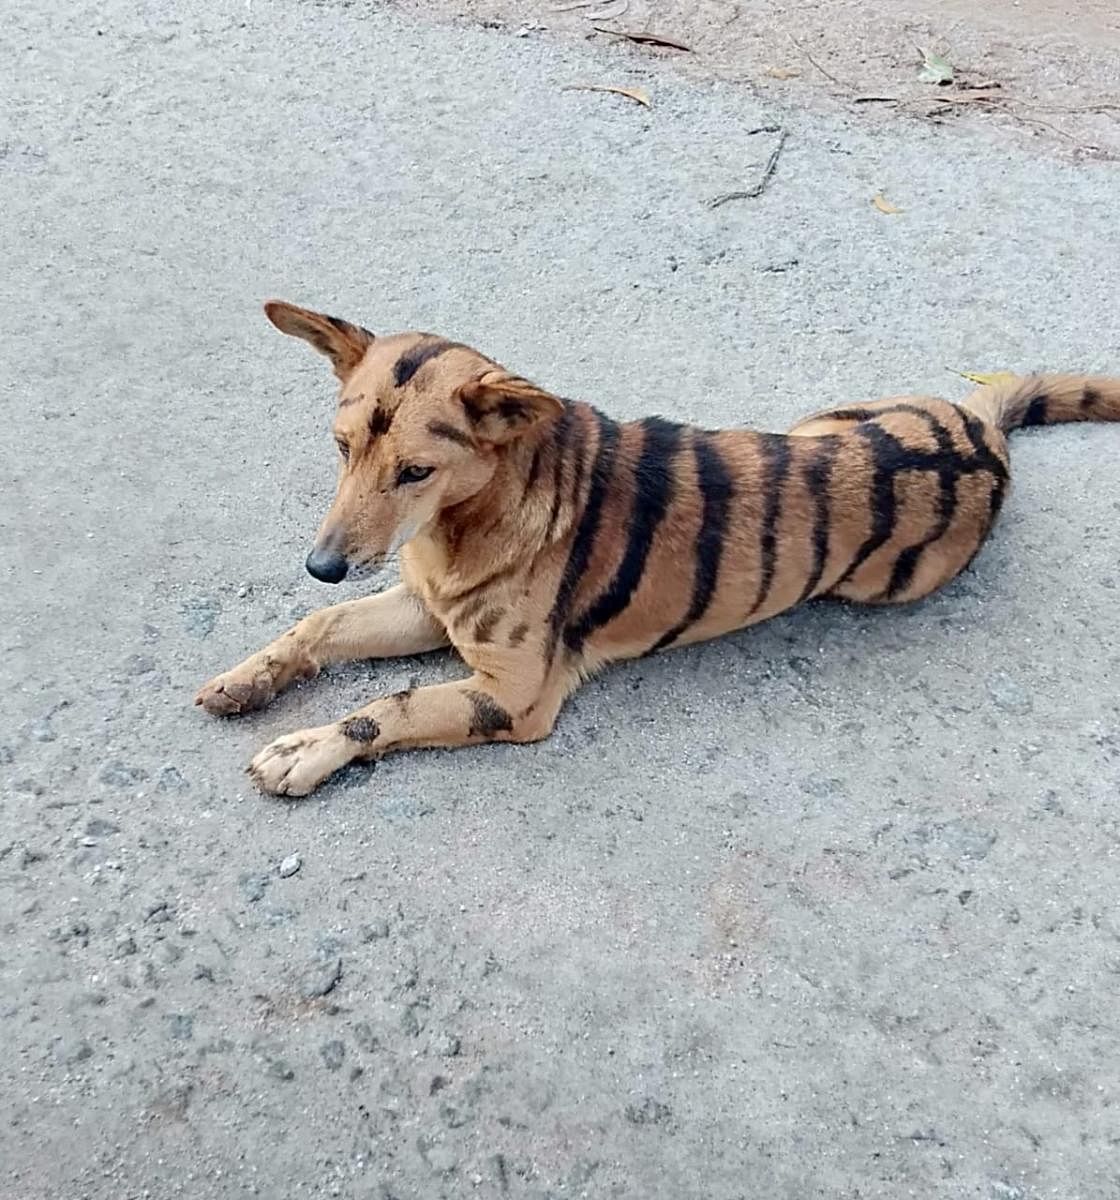 A dog painted with tiger stripes at Heggodu village in Shivamogga.